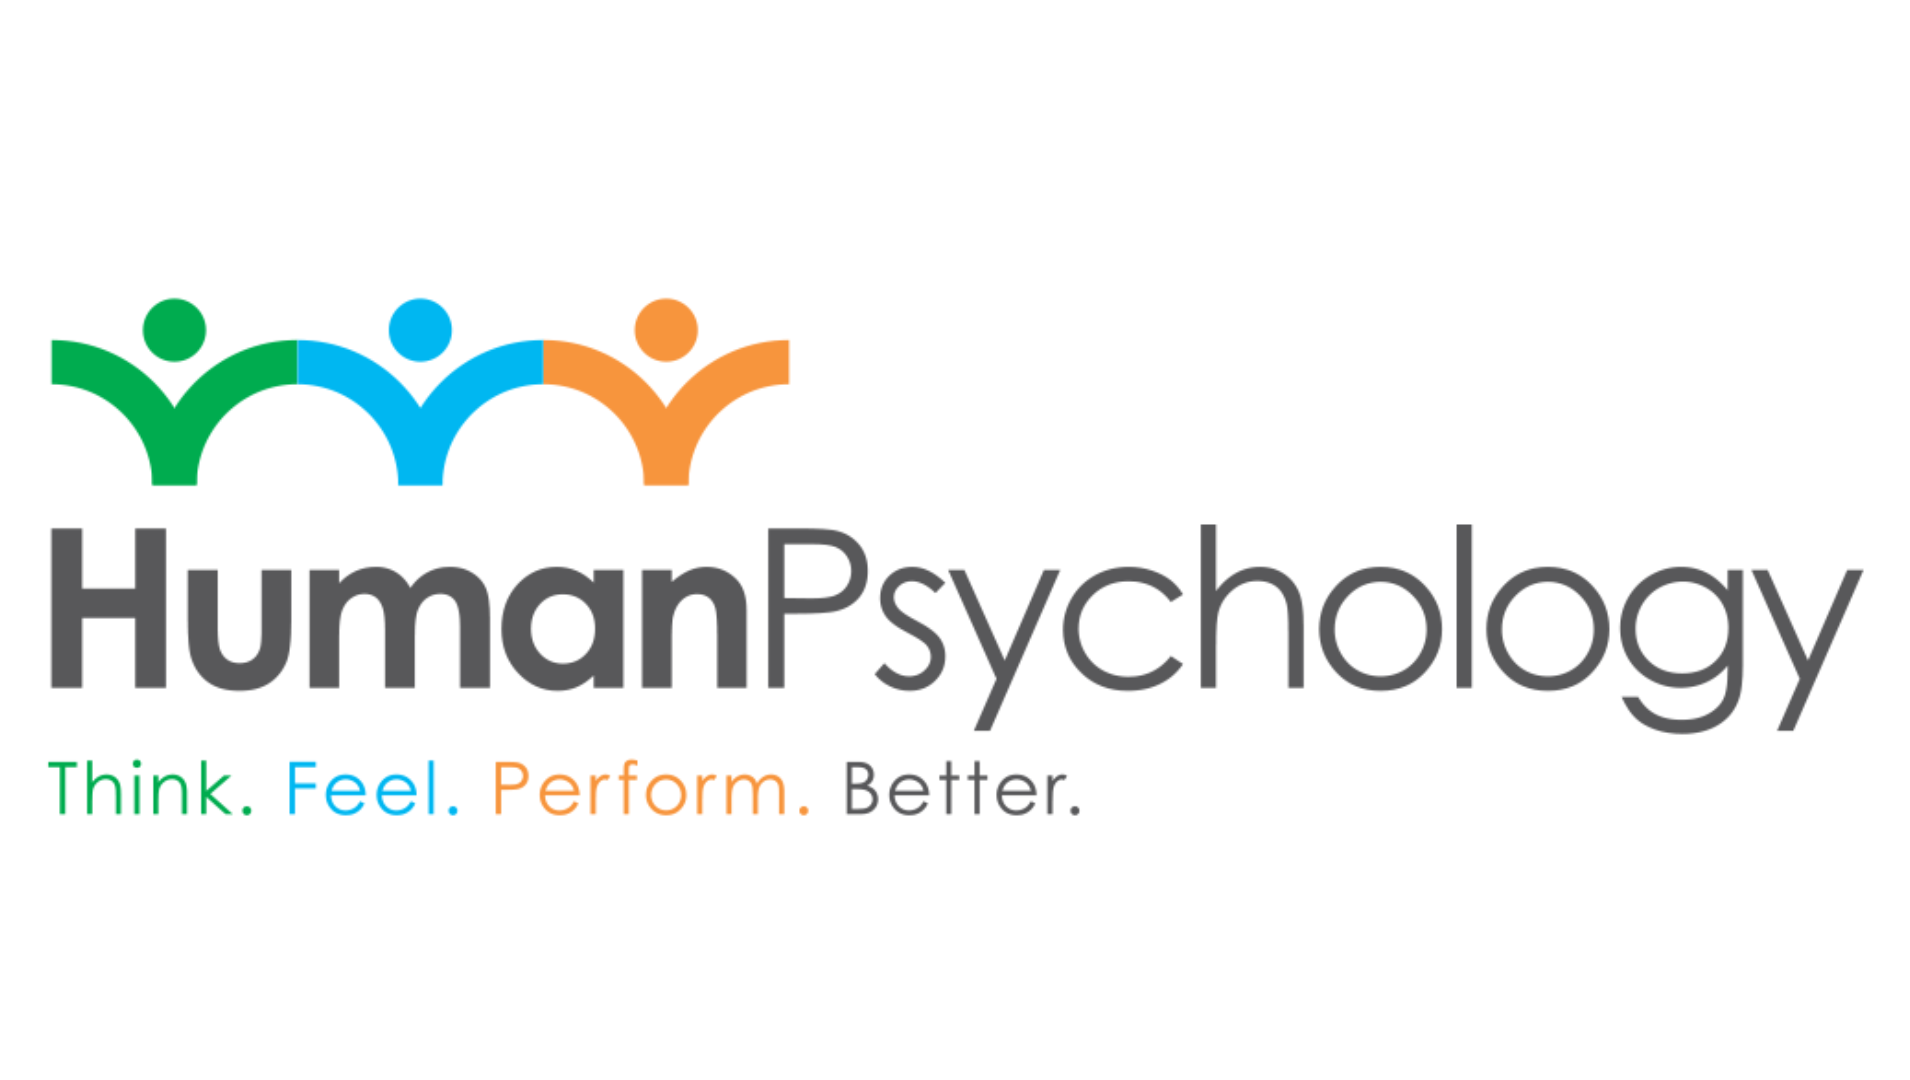 Human Psychology logo